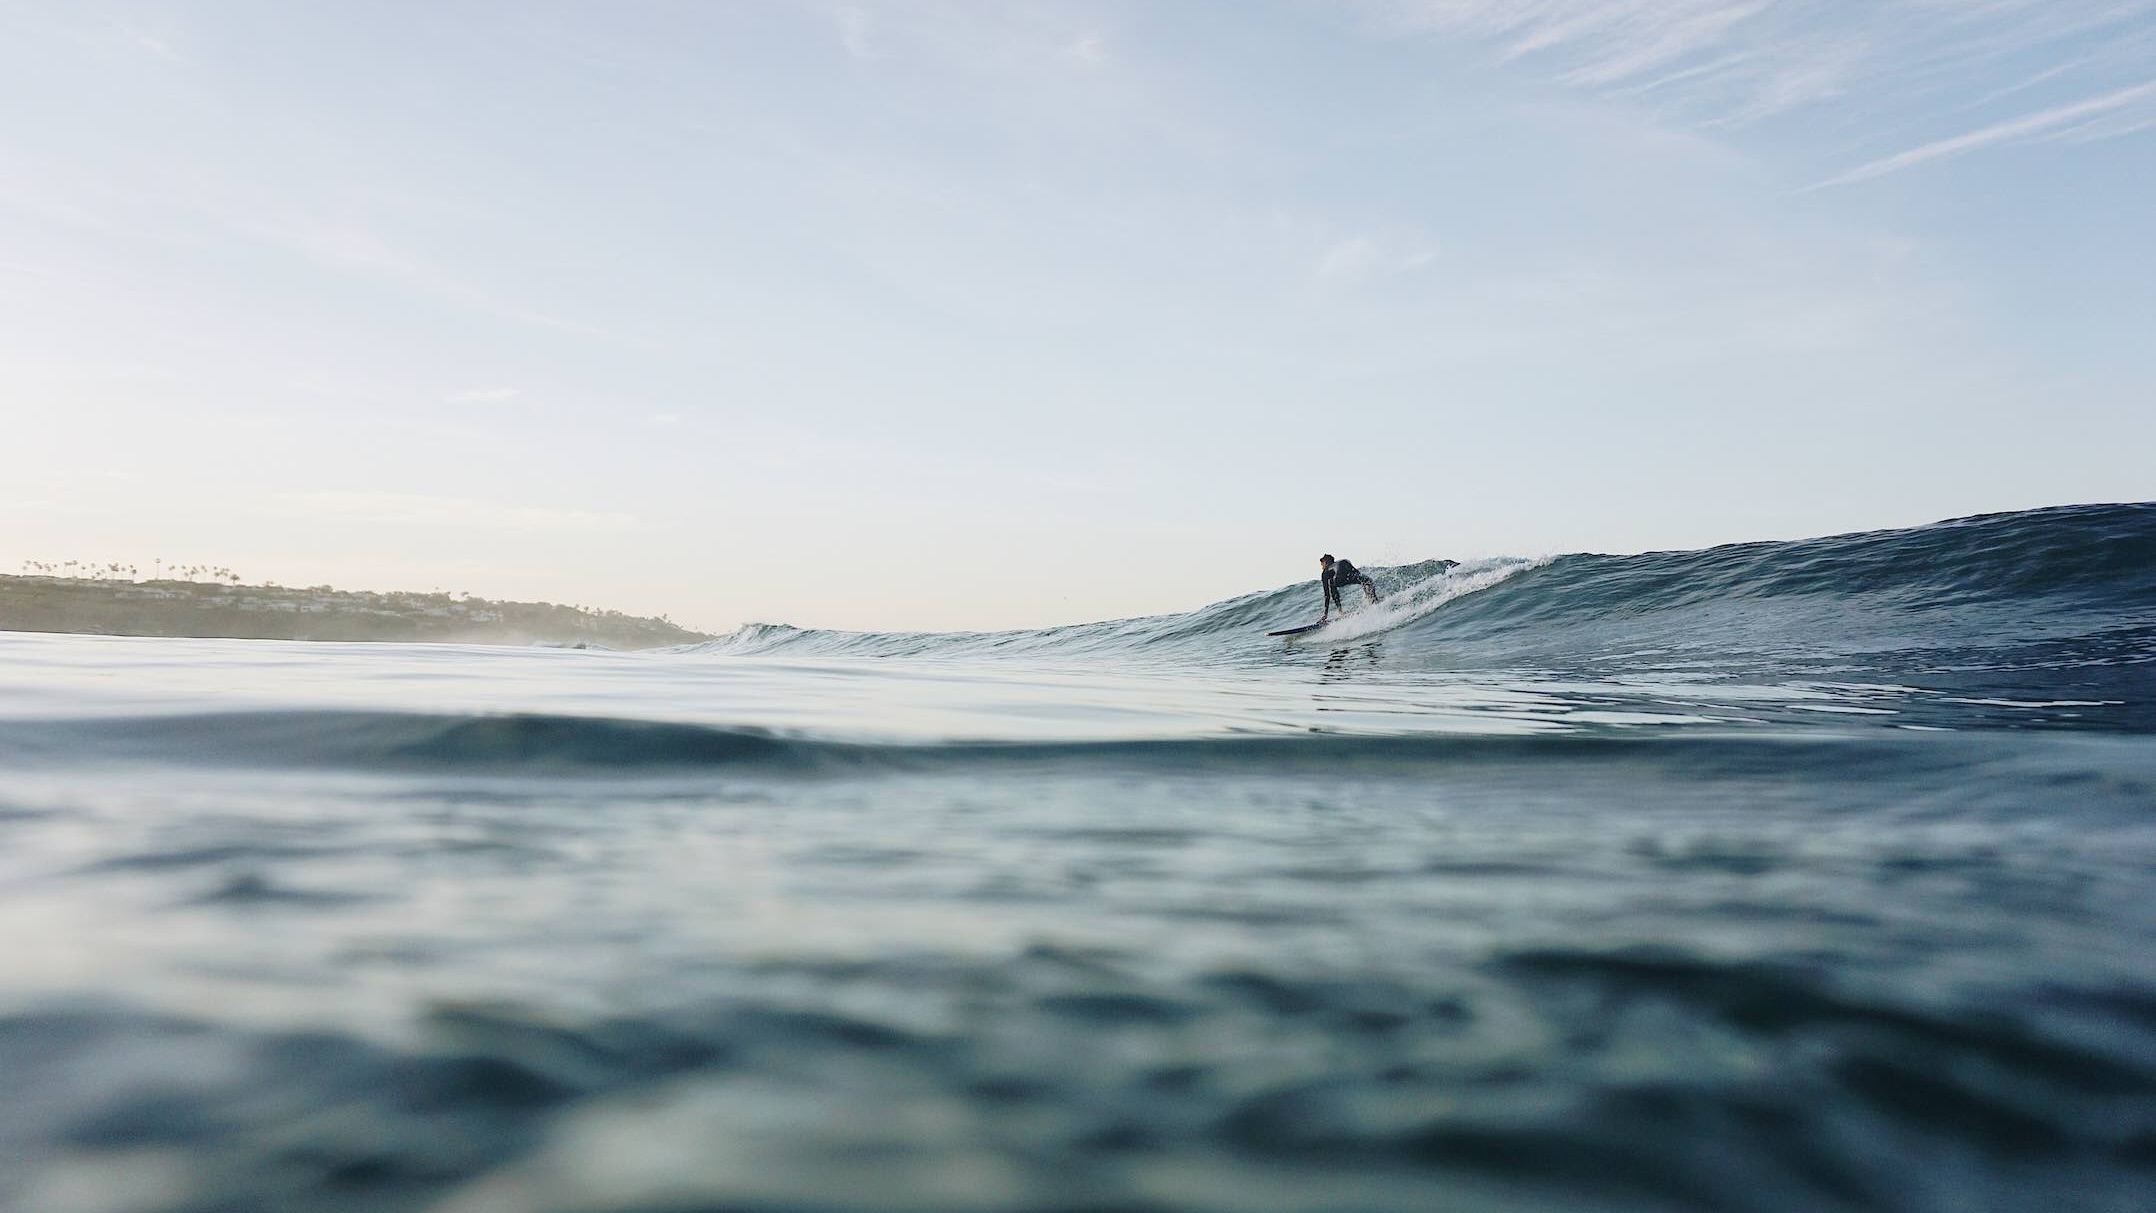 Zuma Beach Malibuparker surfing unsplash